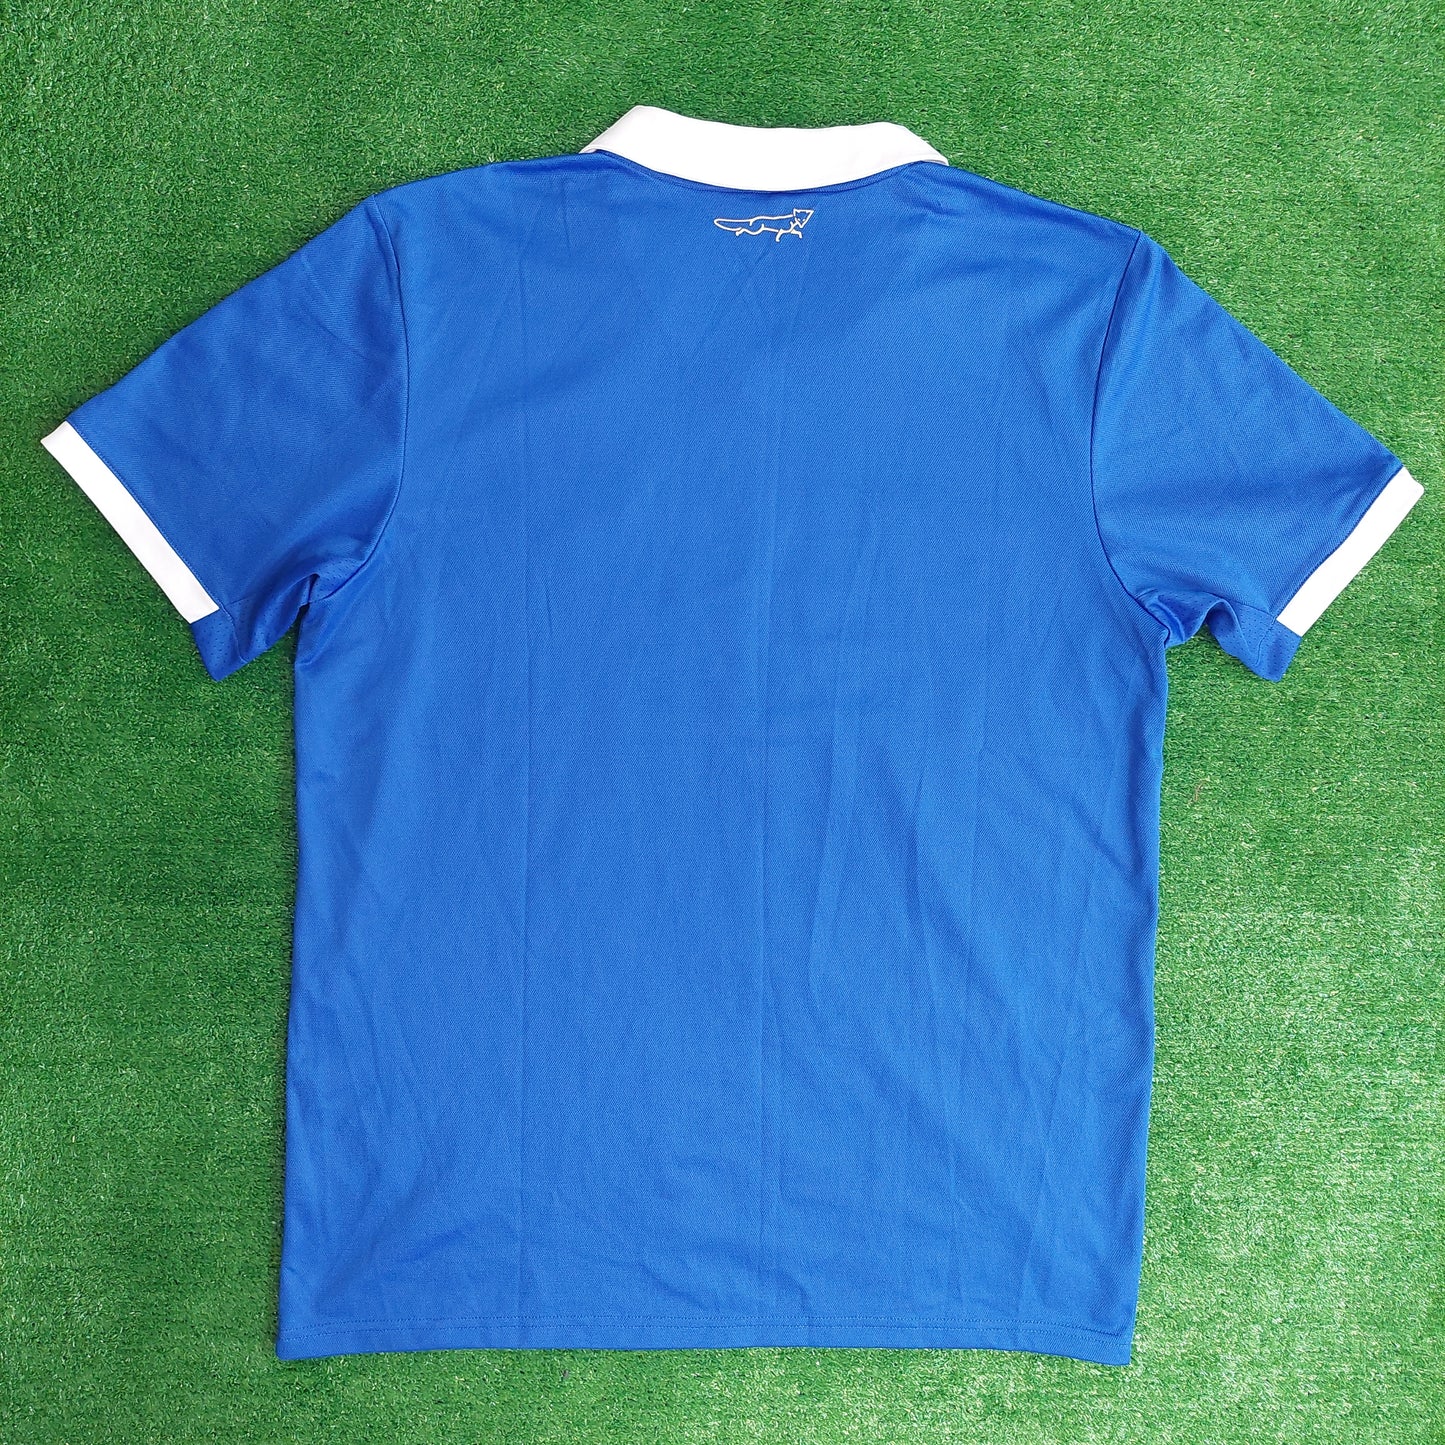 Leicester City 2022/23 Home Shirt (Excellent) - Size L